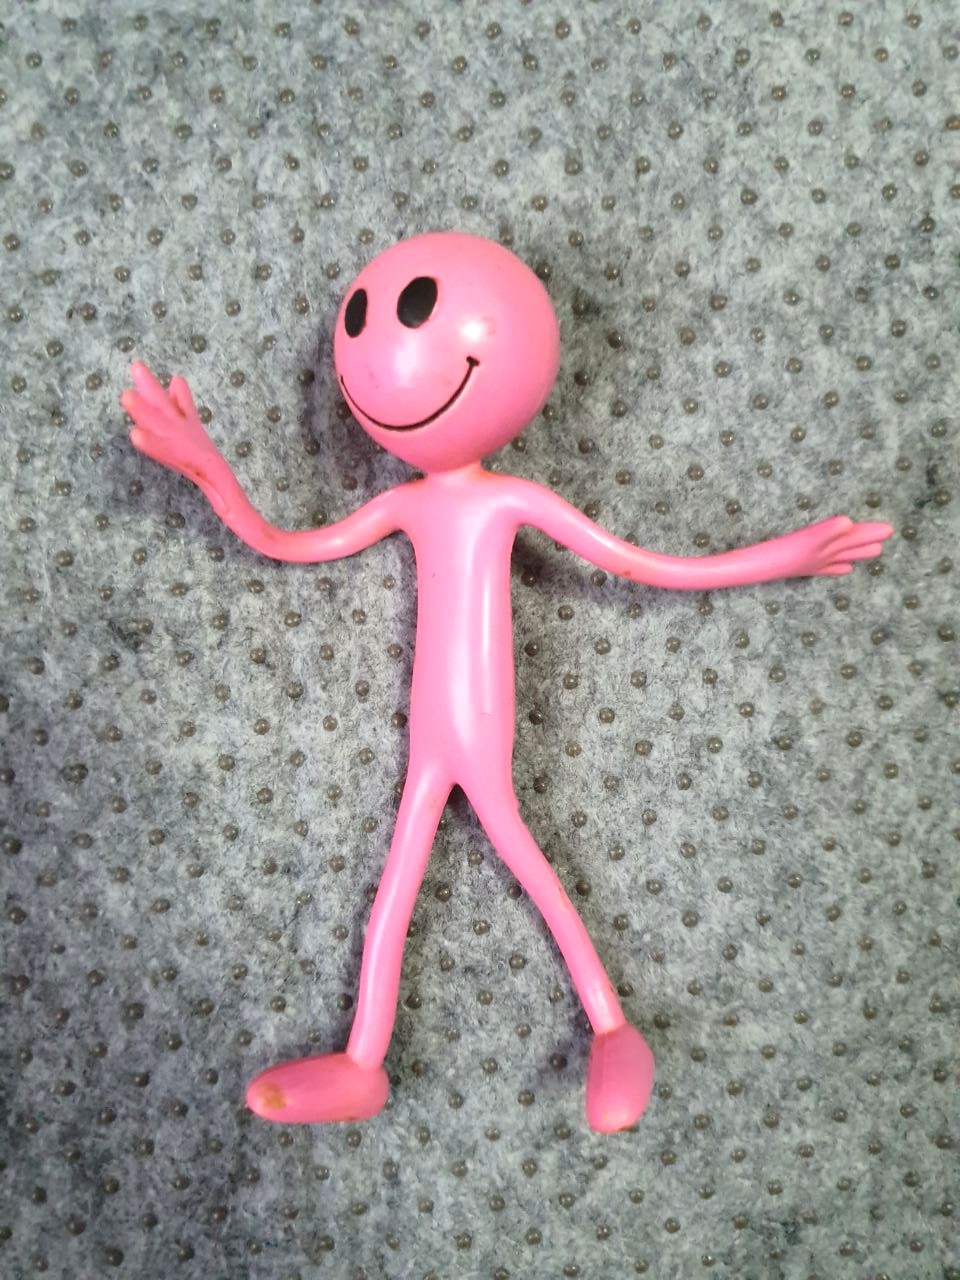 Bendy man toy figurine pink flexible smiley smile figure drawing art ...